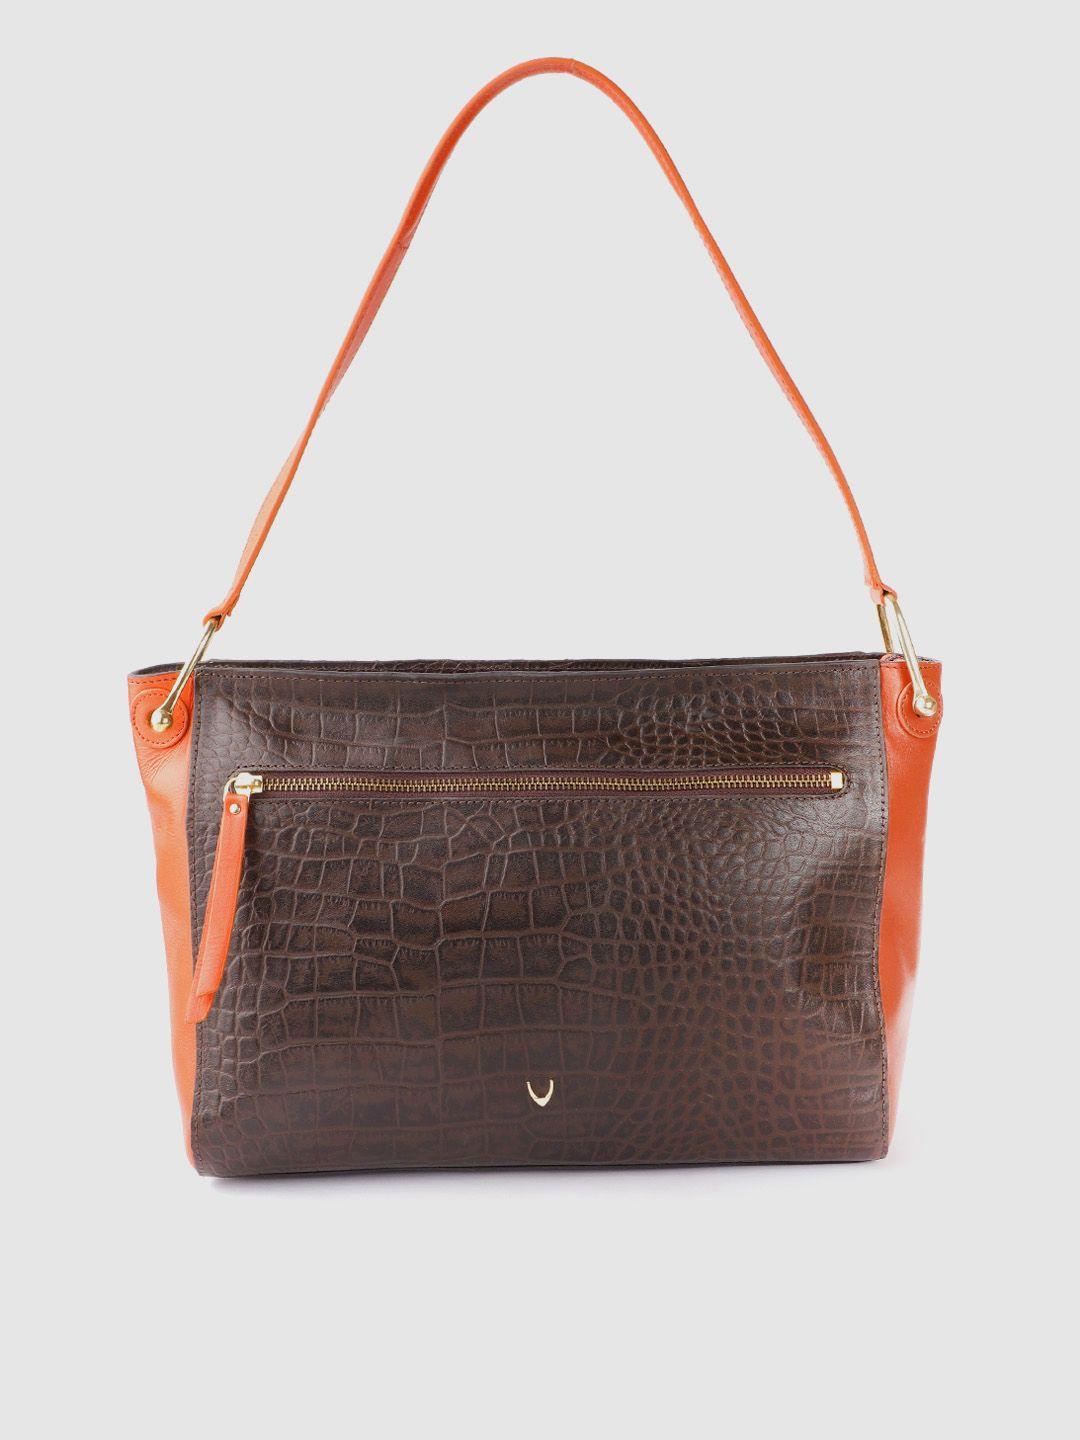 hidesign coffee brown & orange handcrafted croc textured leather structured shoulder bag